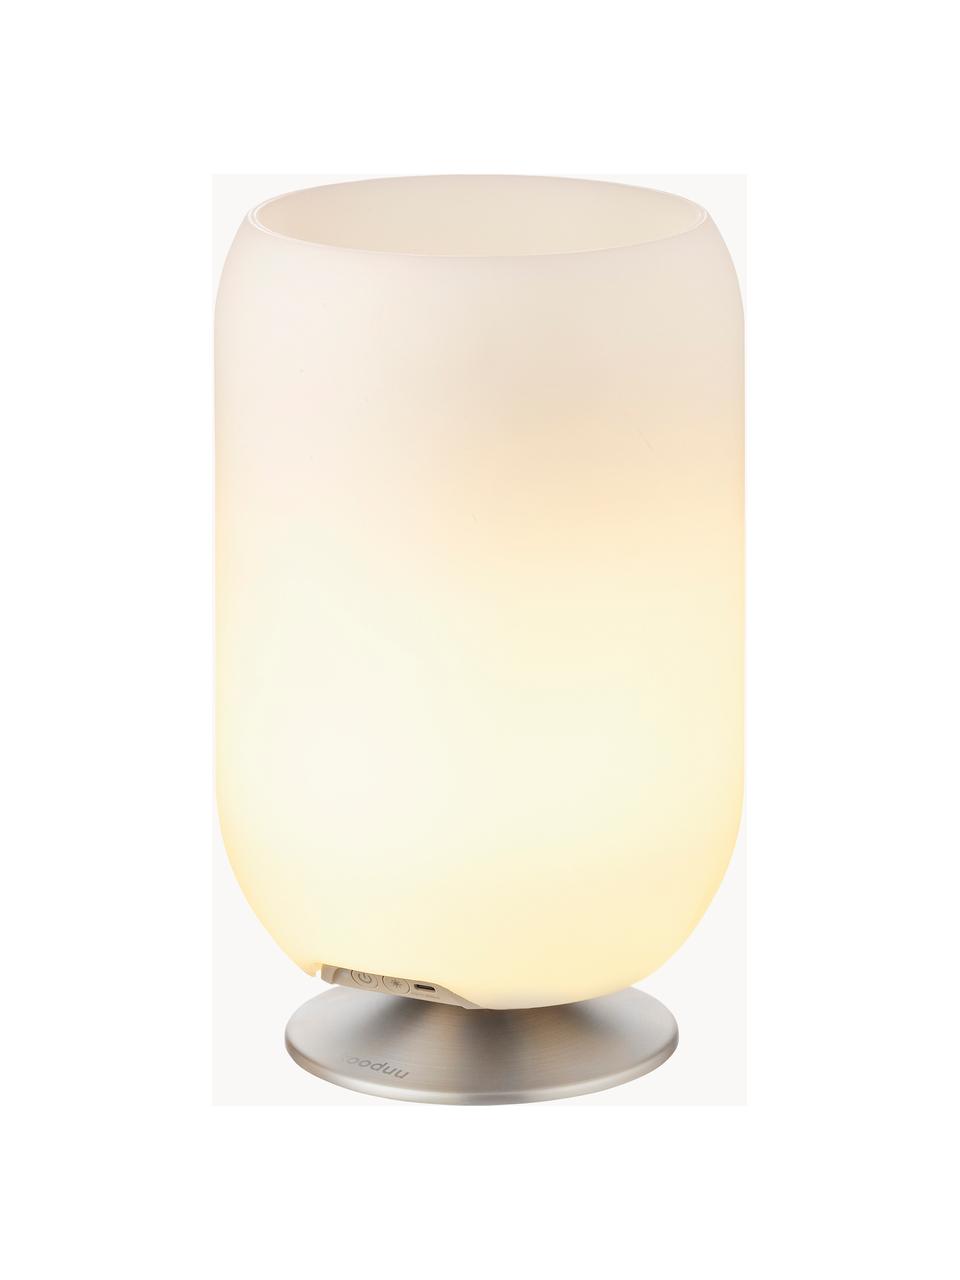 Lampada da tavolo a LED con luce regolabile e altoparlante Bluetooth Atmos, Paralume: polietilene, Struttura: metallo rivestito, Bianco, argentato, Ø 22 x Alt. 37 cm